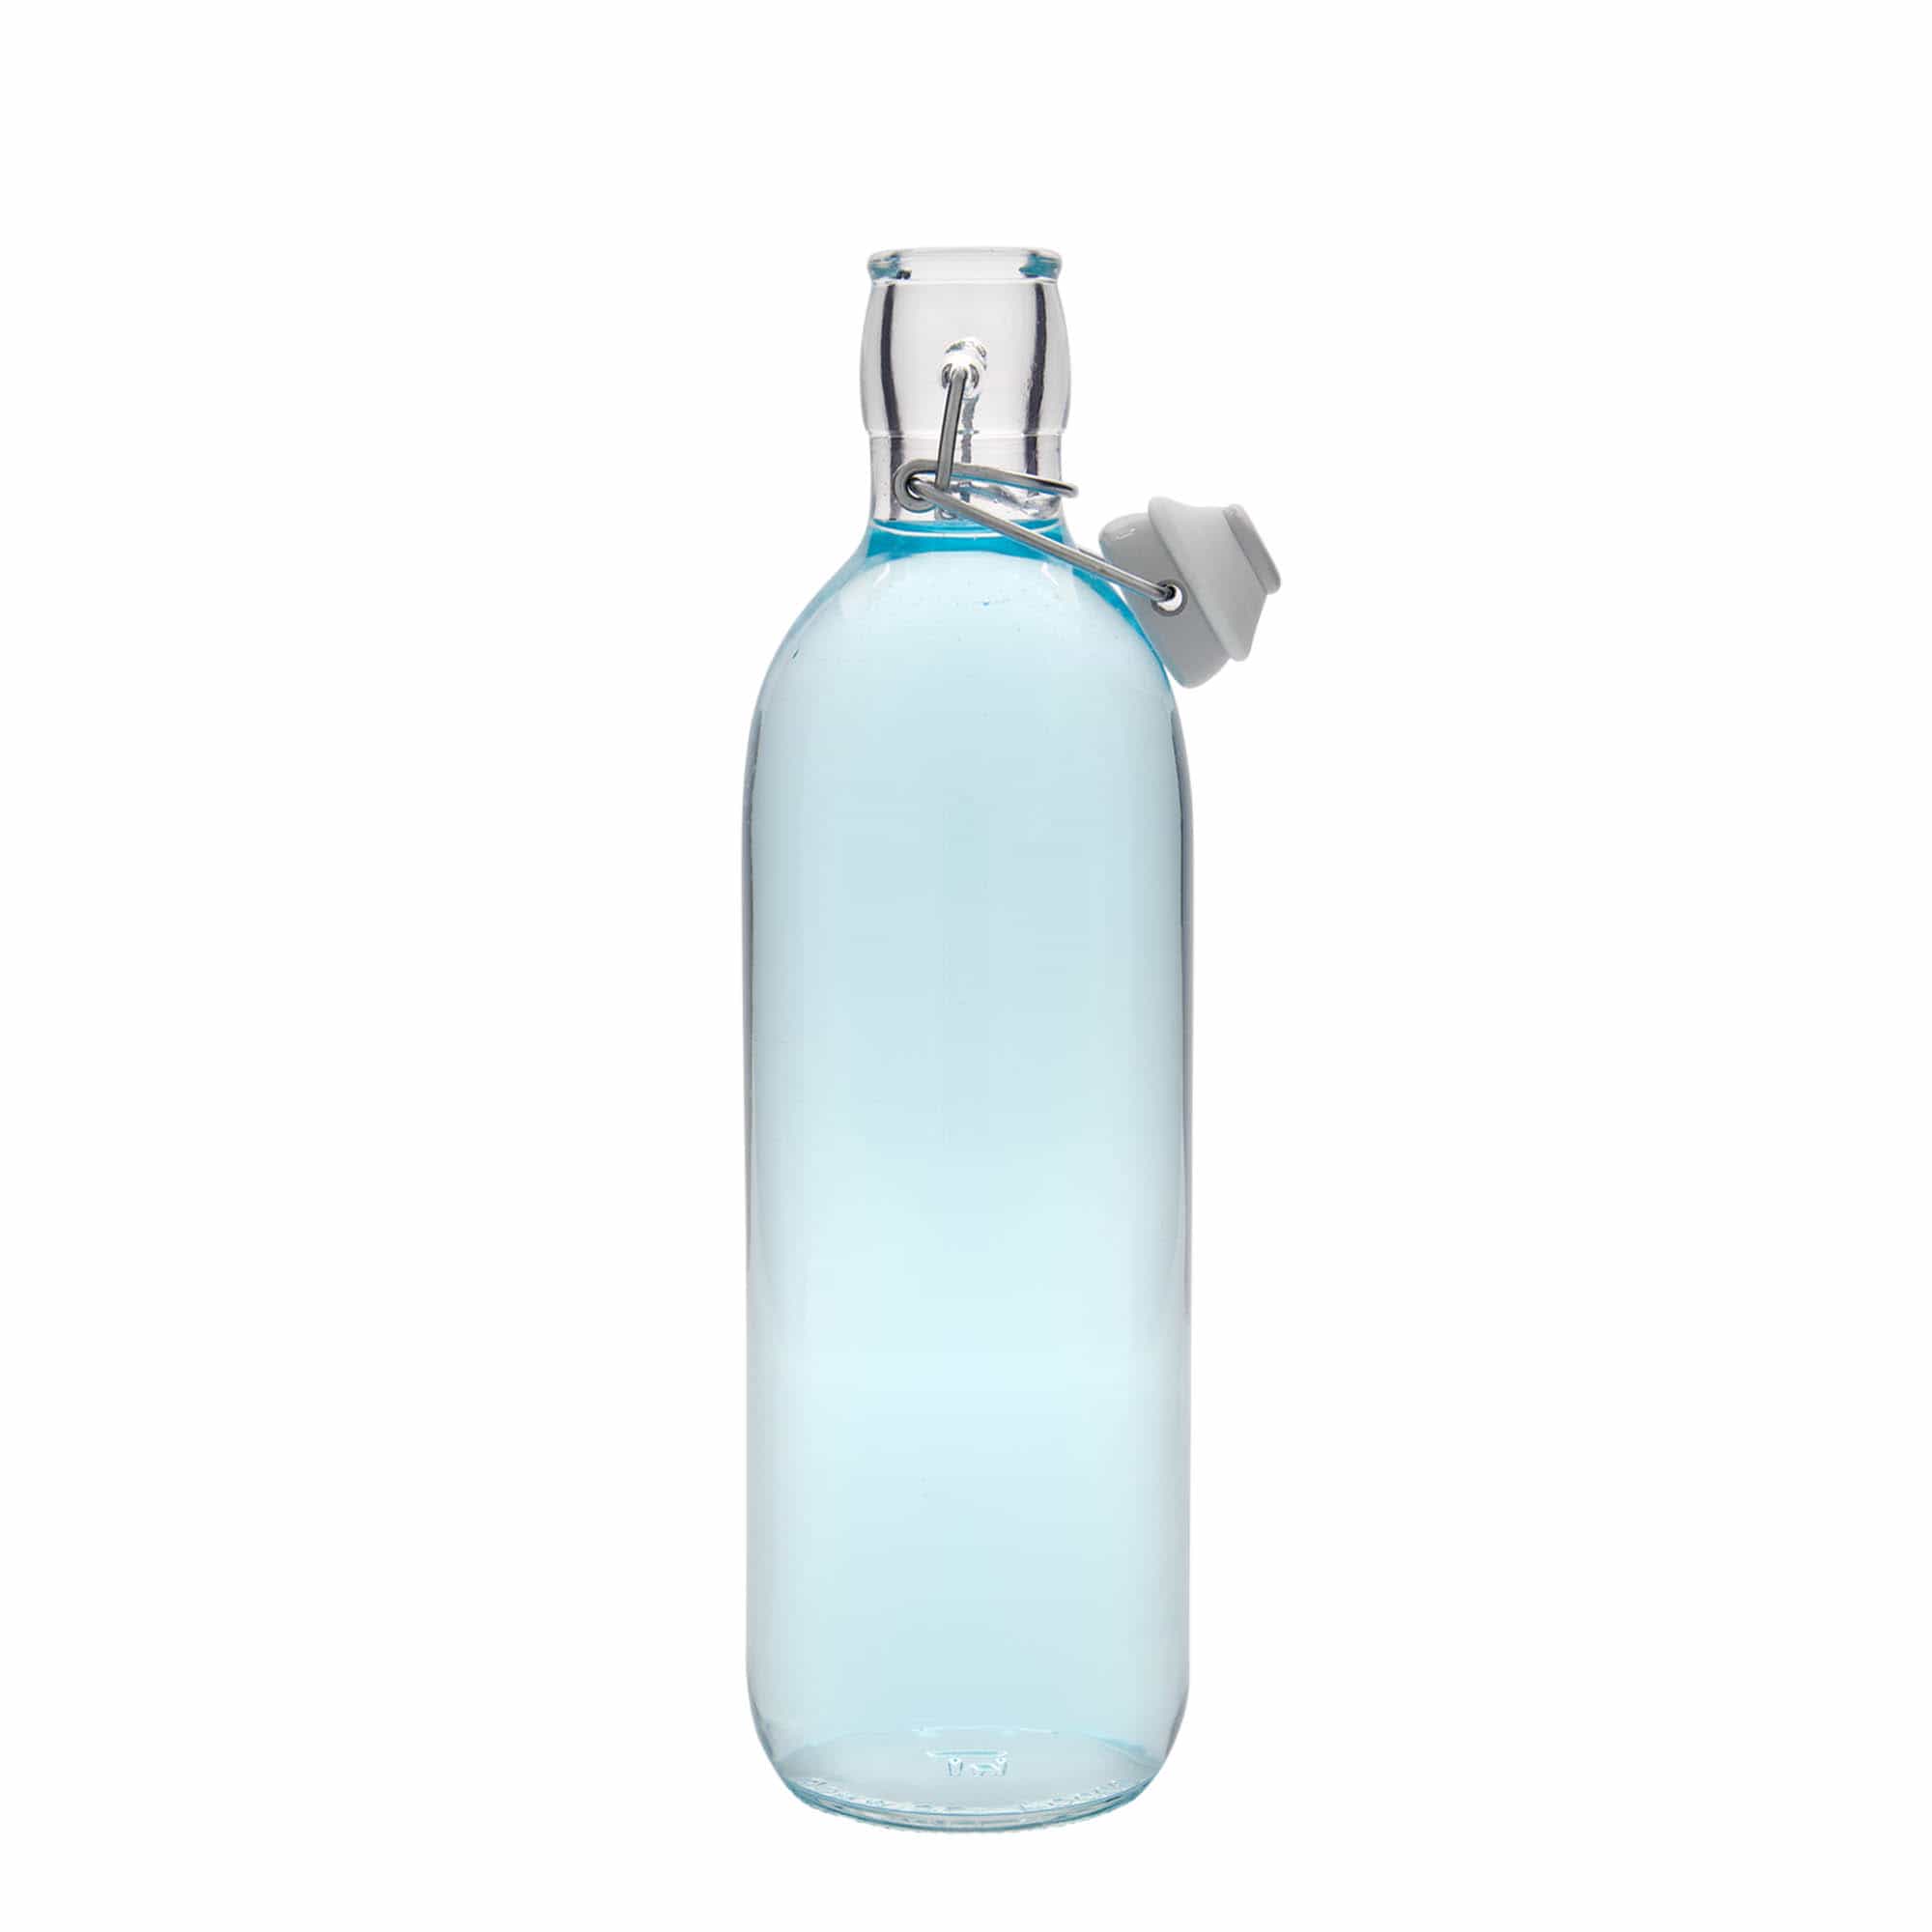 1,000 ml glass bottle 'Emilia', closure: swing top